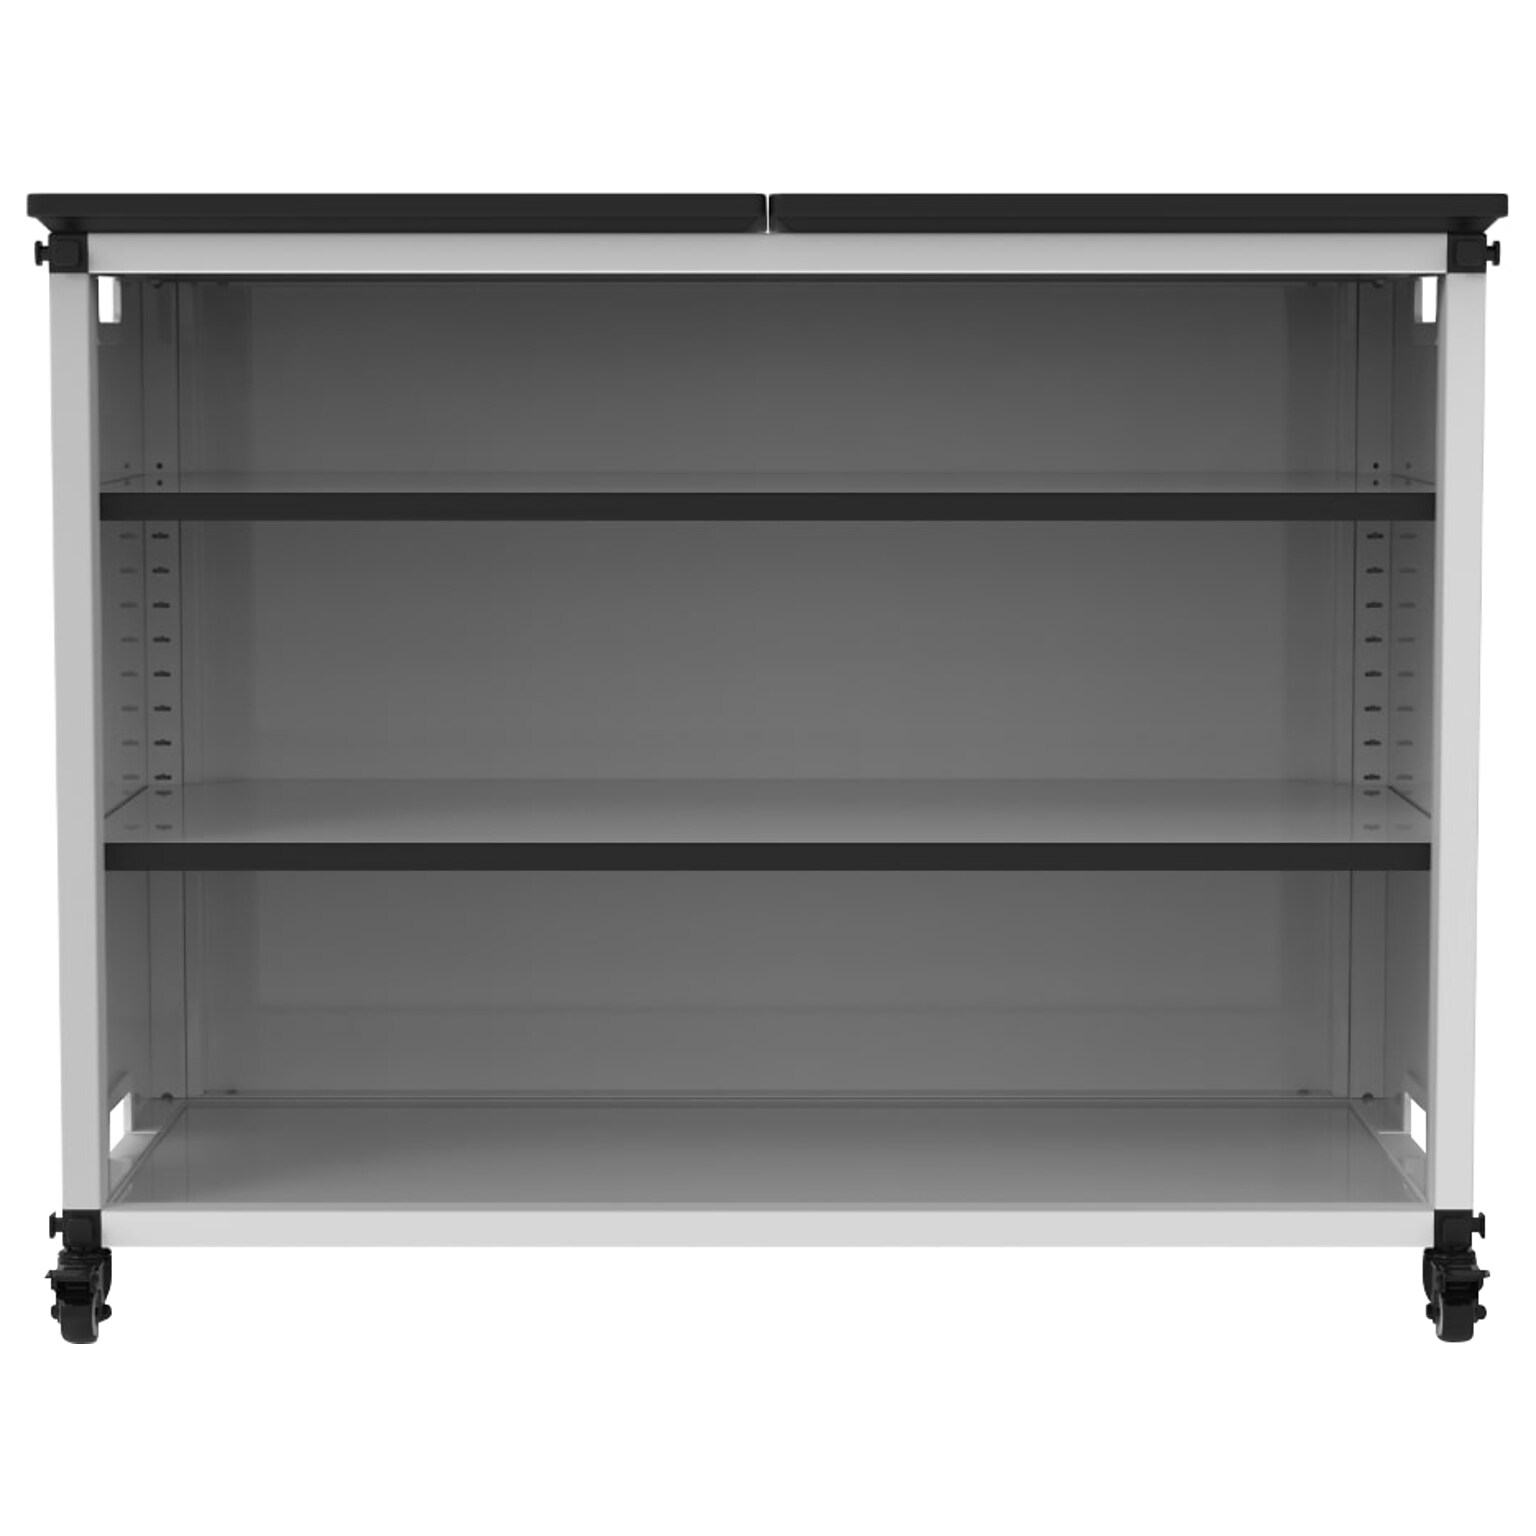 Luxor Mobile 3-Section Modular Classroom Bookshelf, 29H x 36.5W x 18.25D, White (MBSCB03)